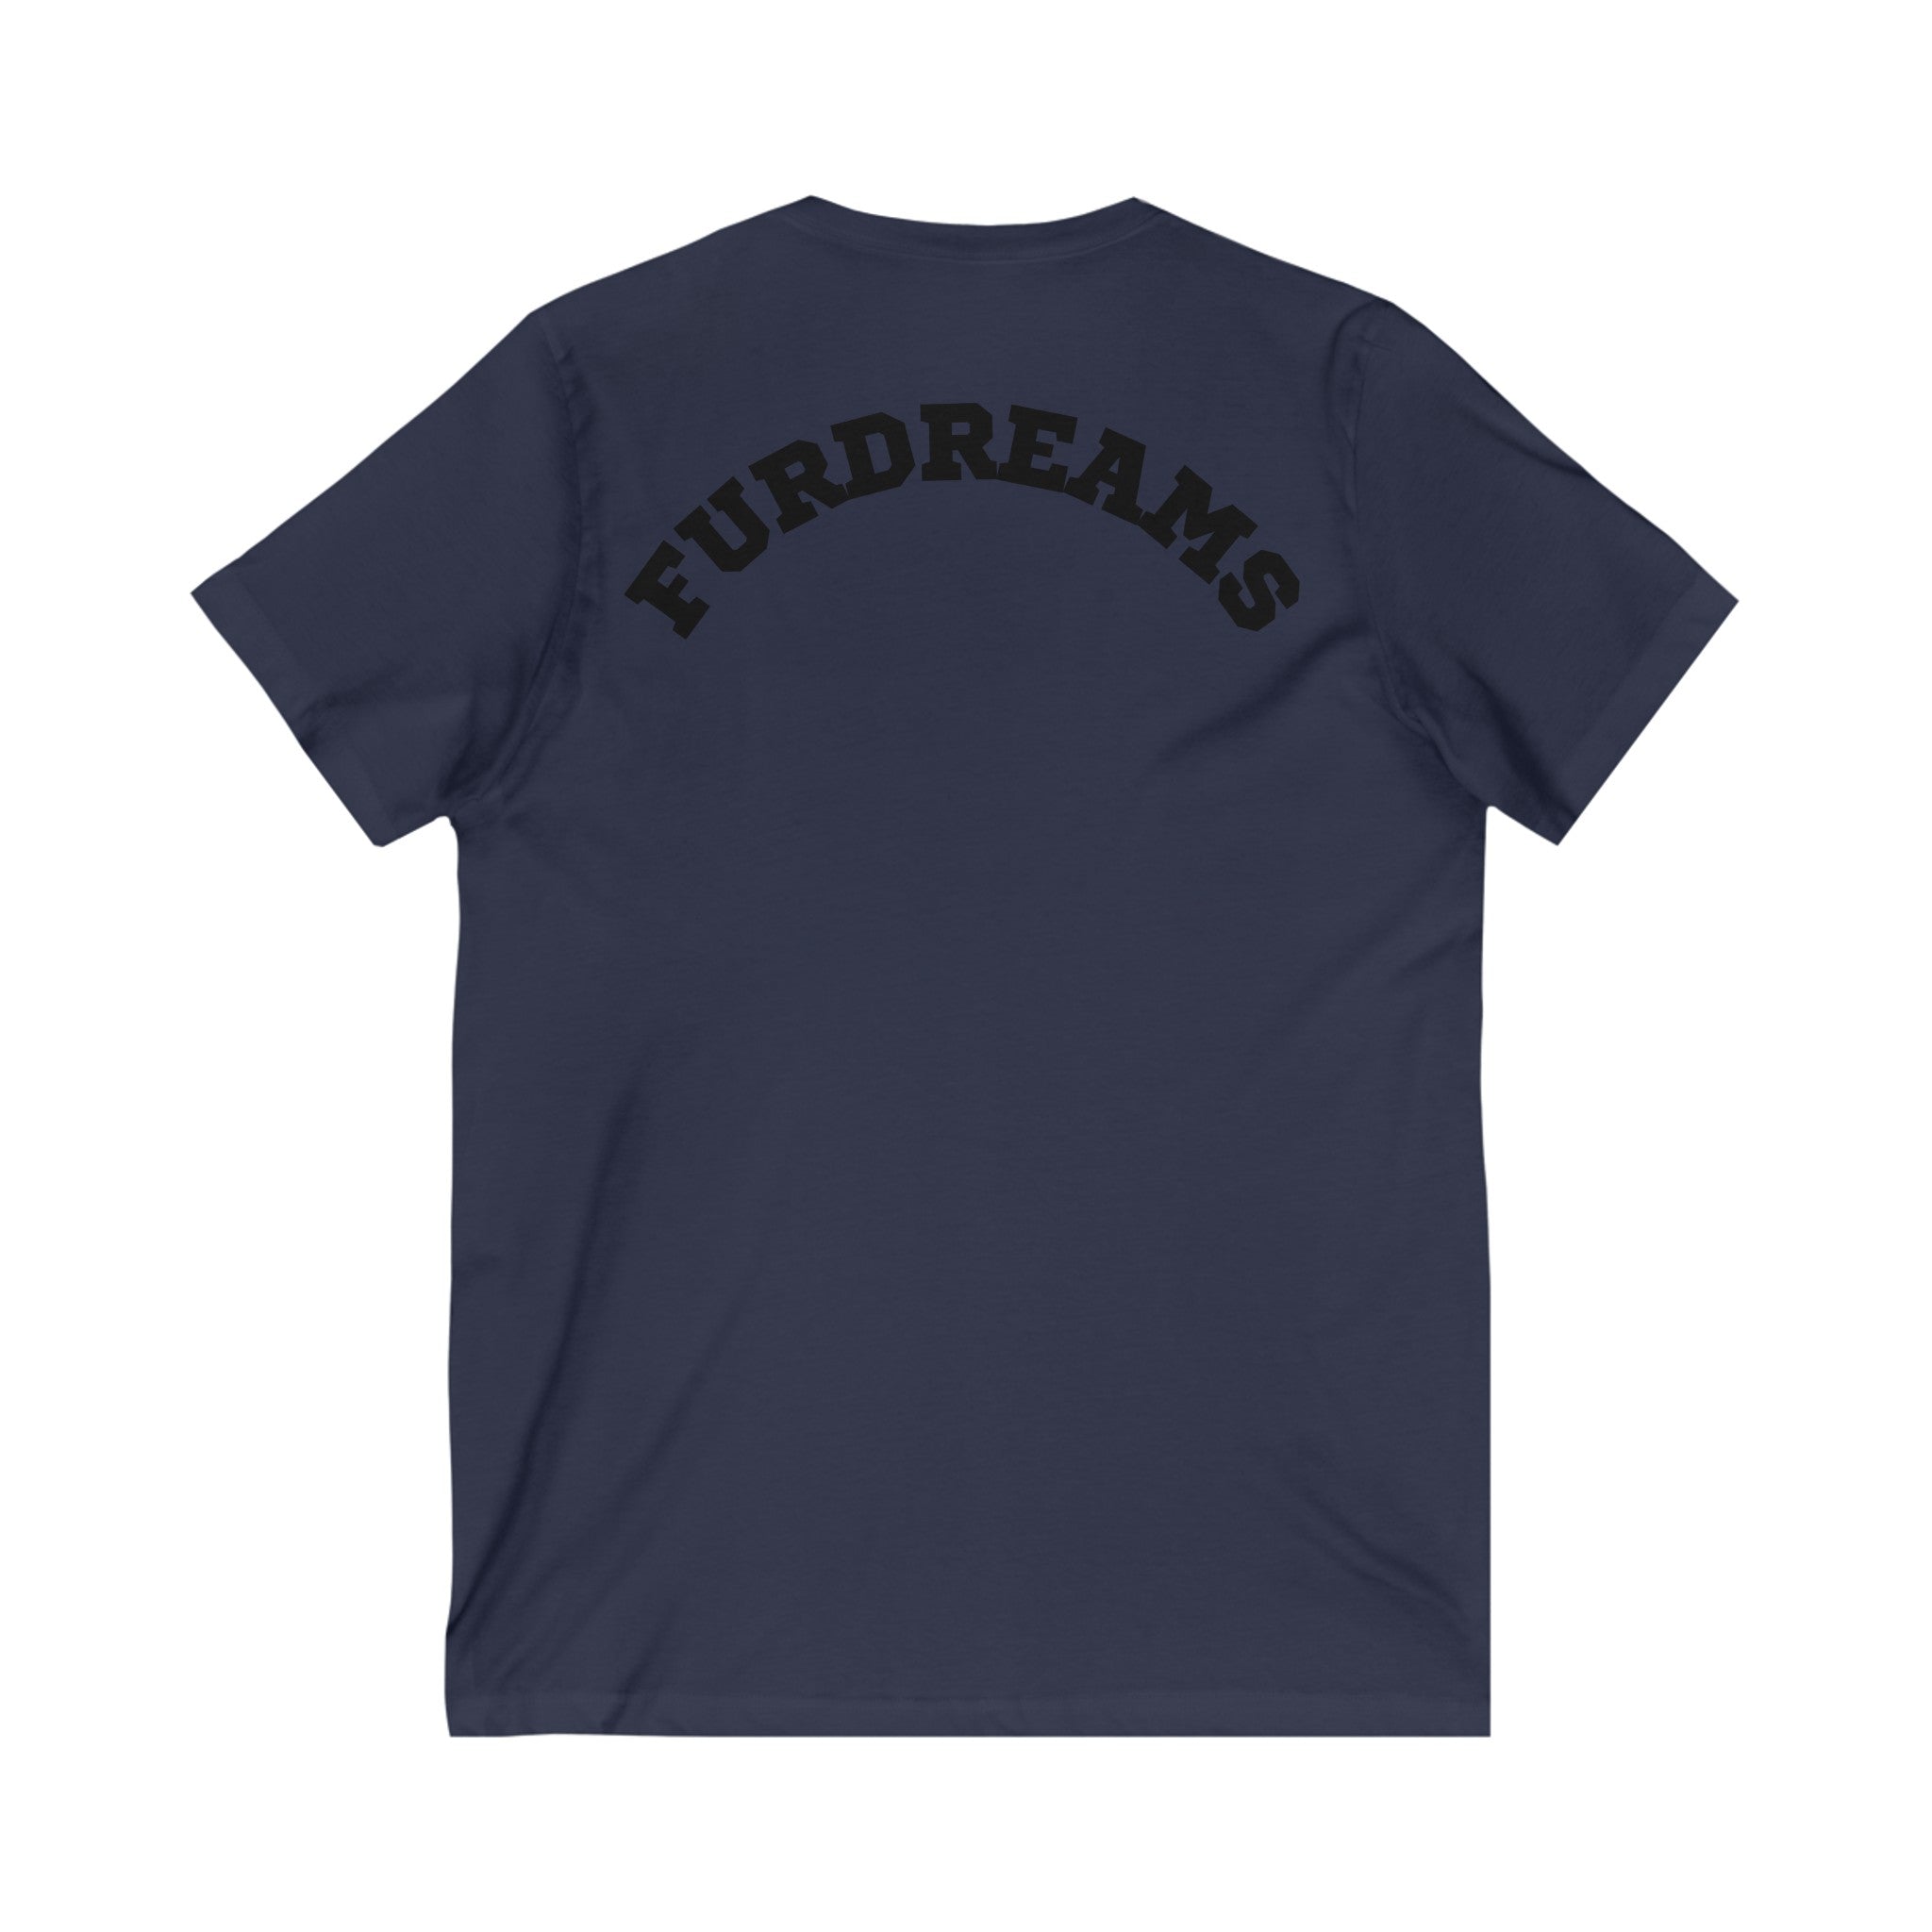 FURDreams “ORD” I  Short Sleeve V-Neck